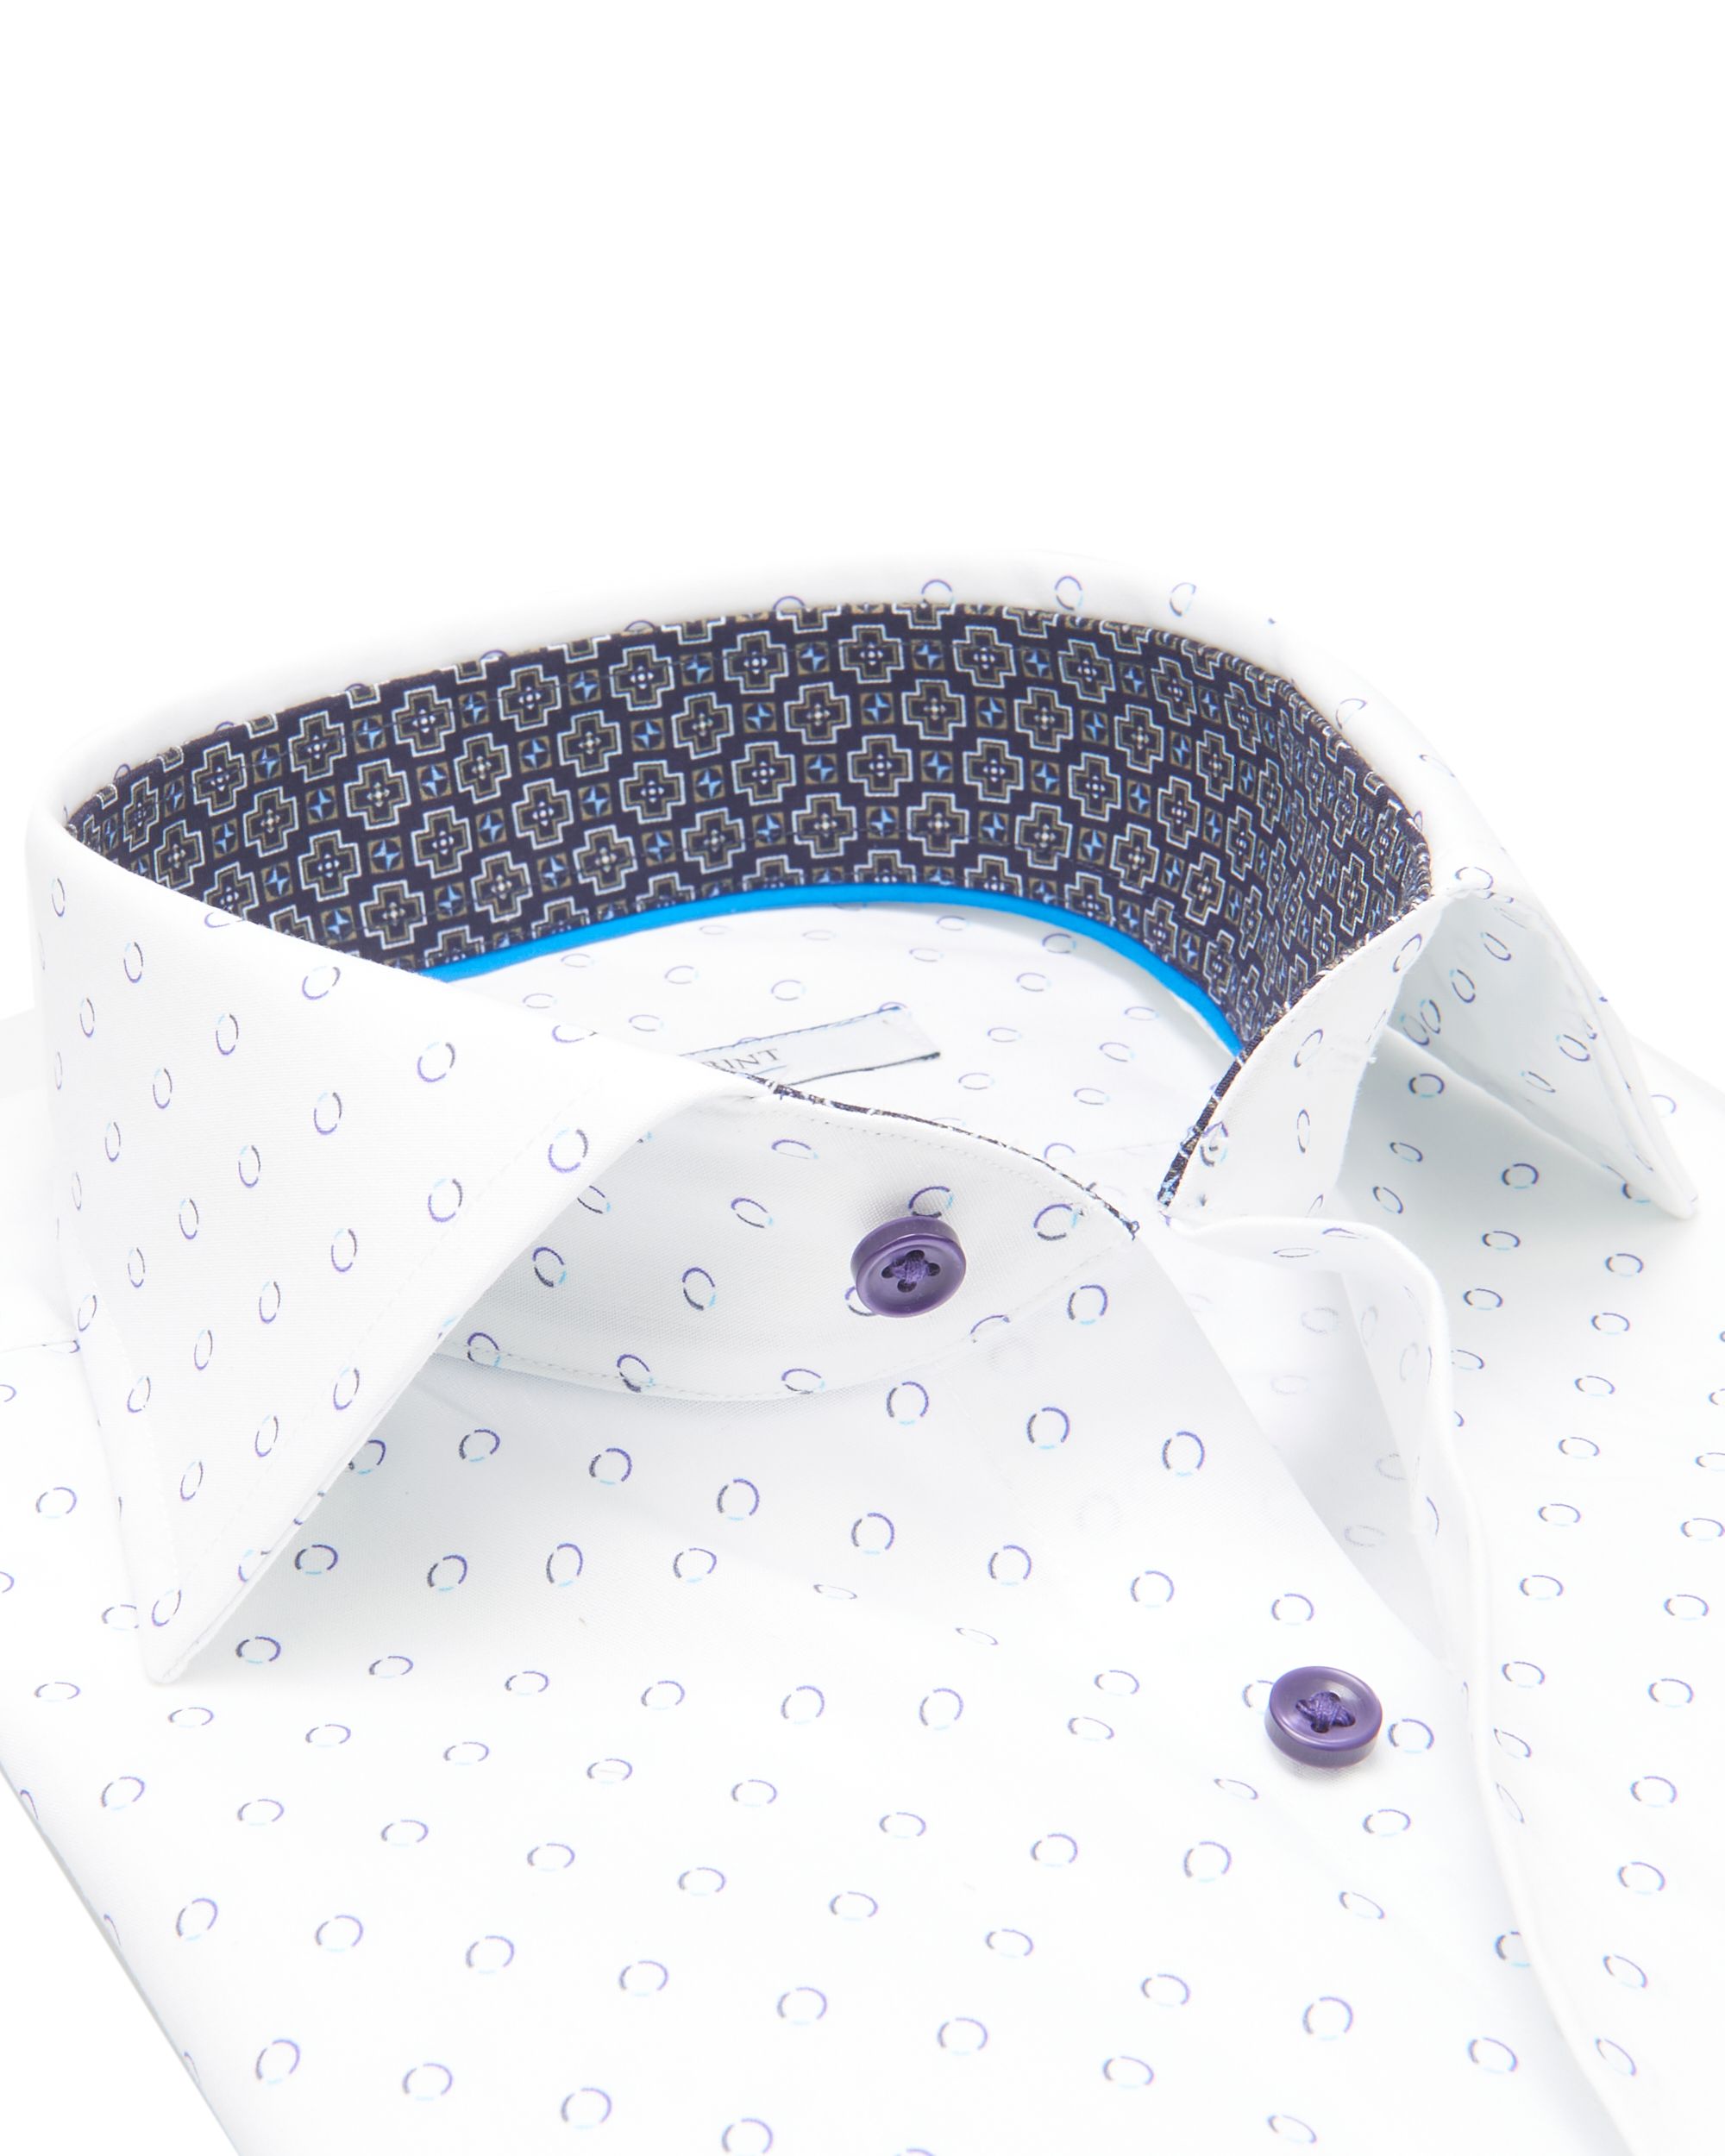 The BLUEPRINT Premium Trendy Overhemd LM Blauw stip  078187-001-L